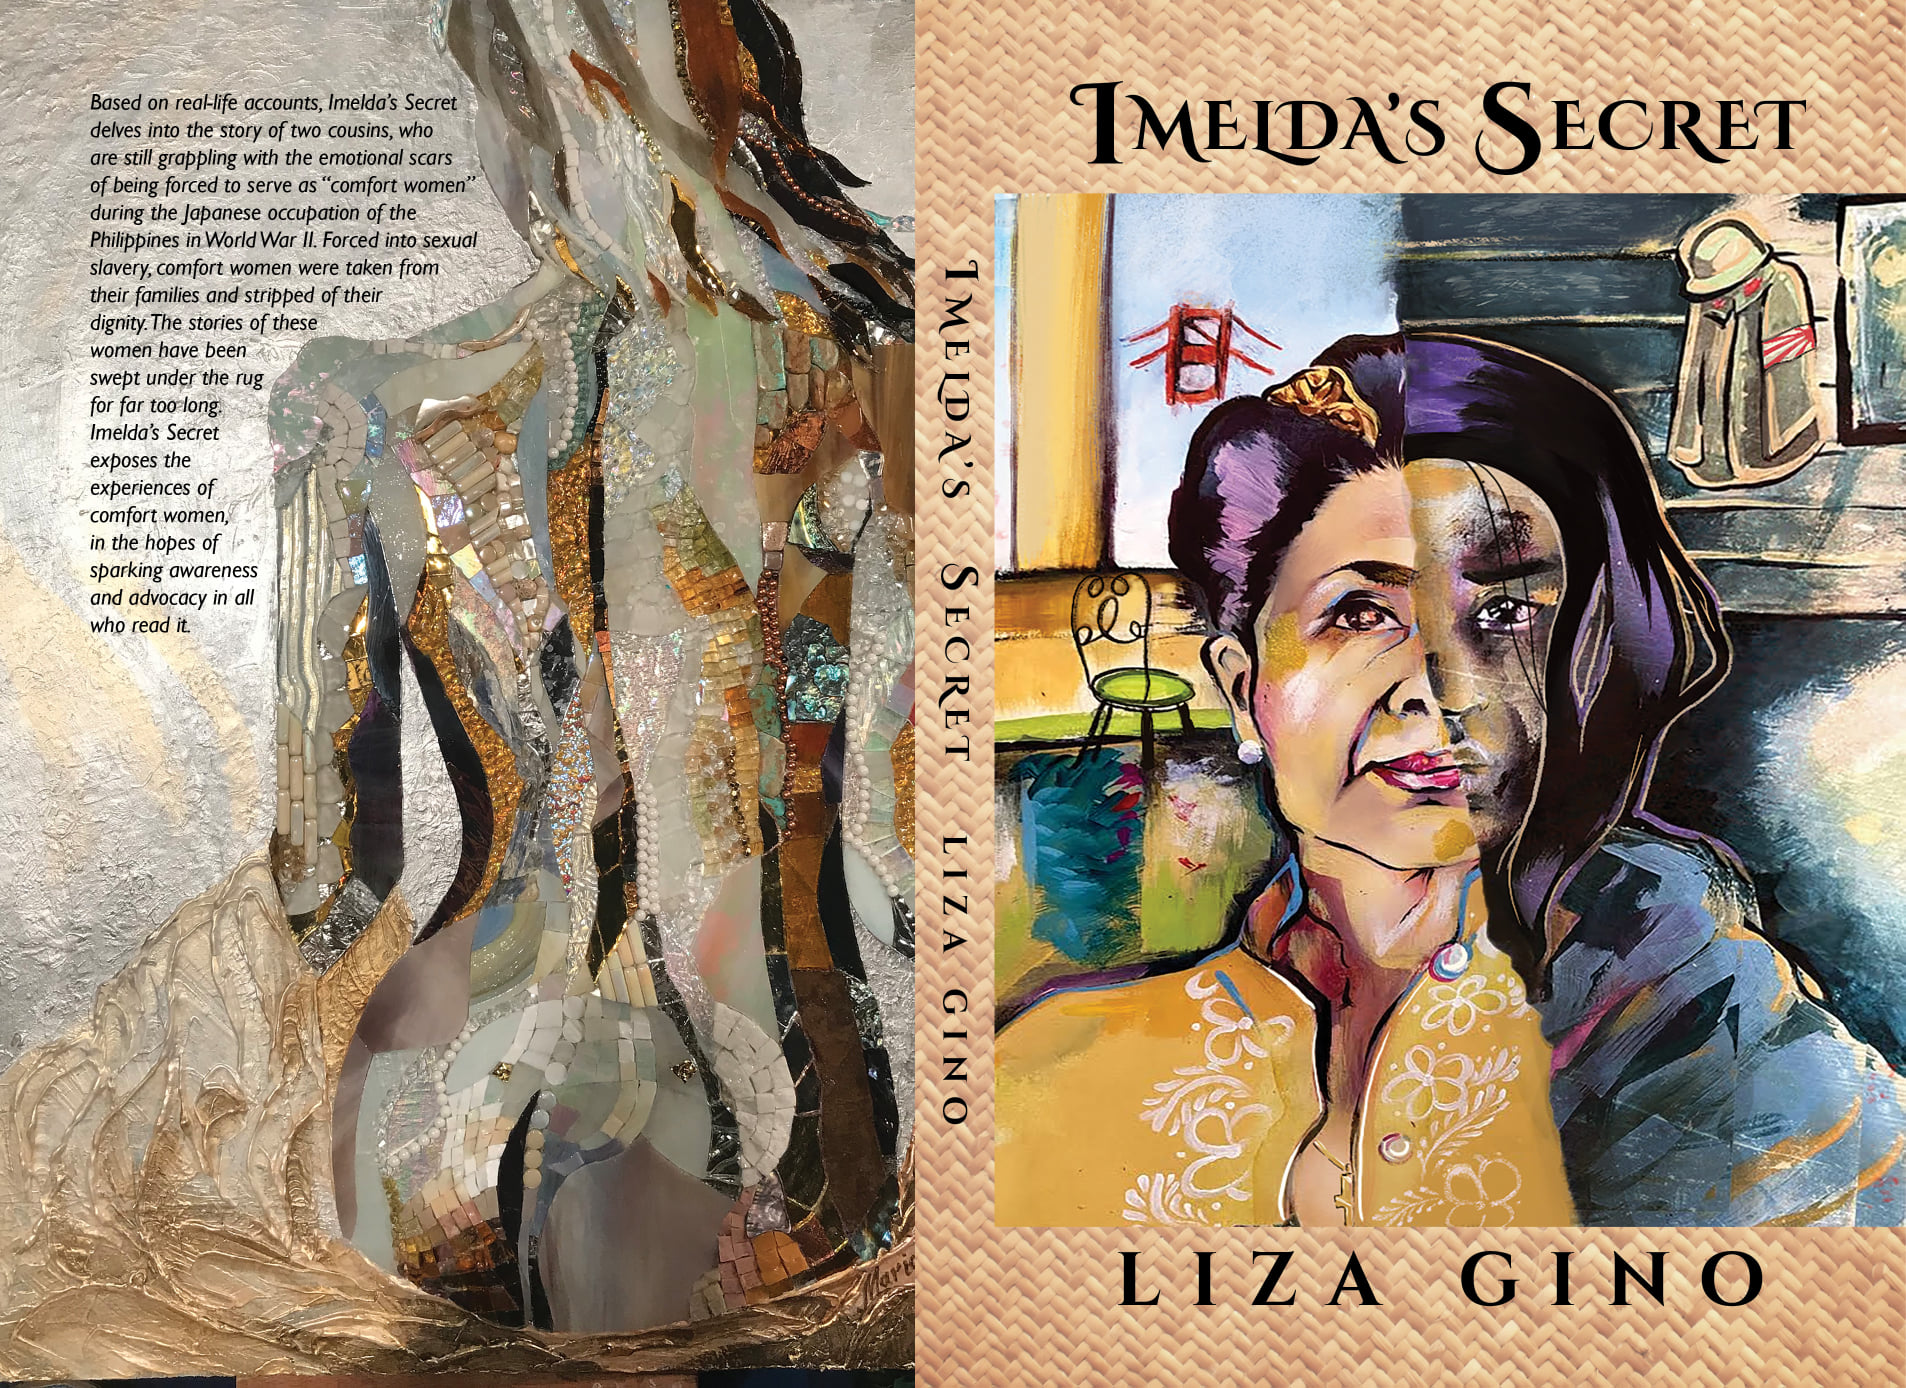 Virtual Book Launch Set for Imelda’s Secret, a Novel Exposing the Secret Shame of “Comfort Women” During World War II